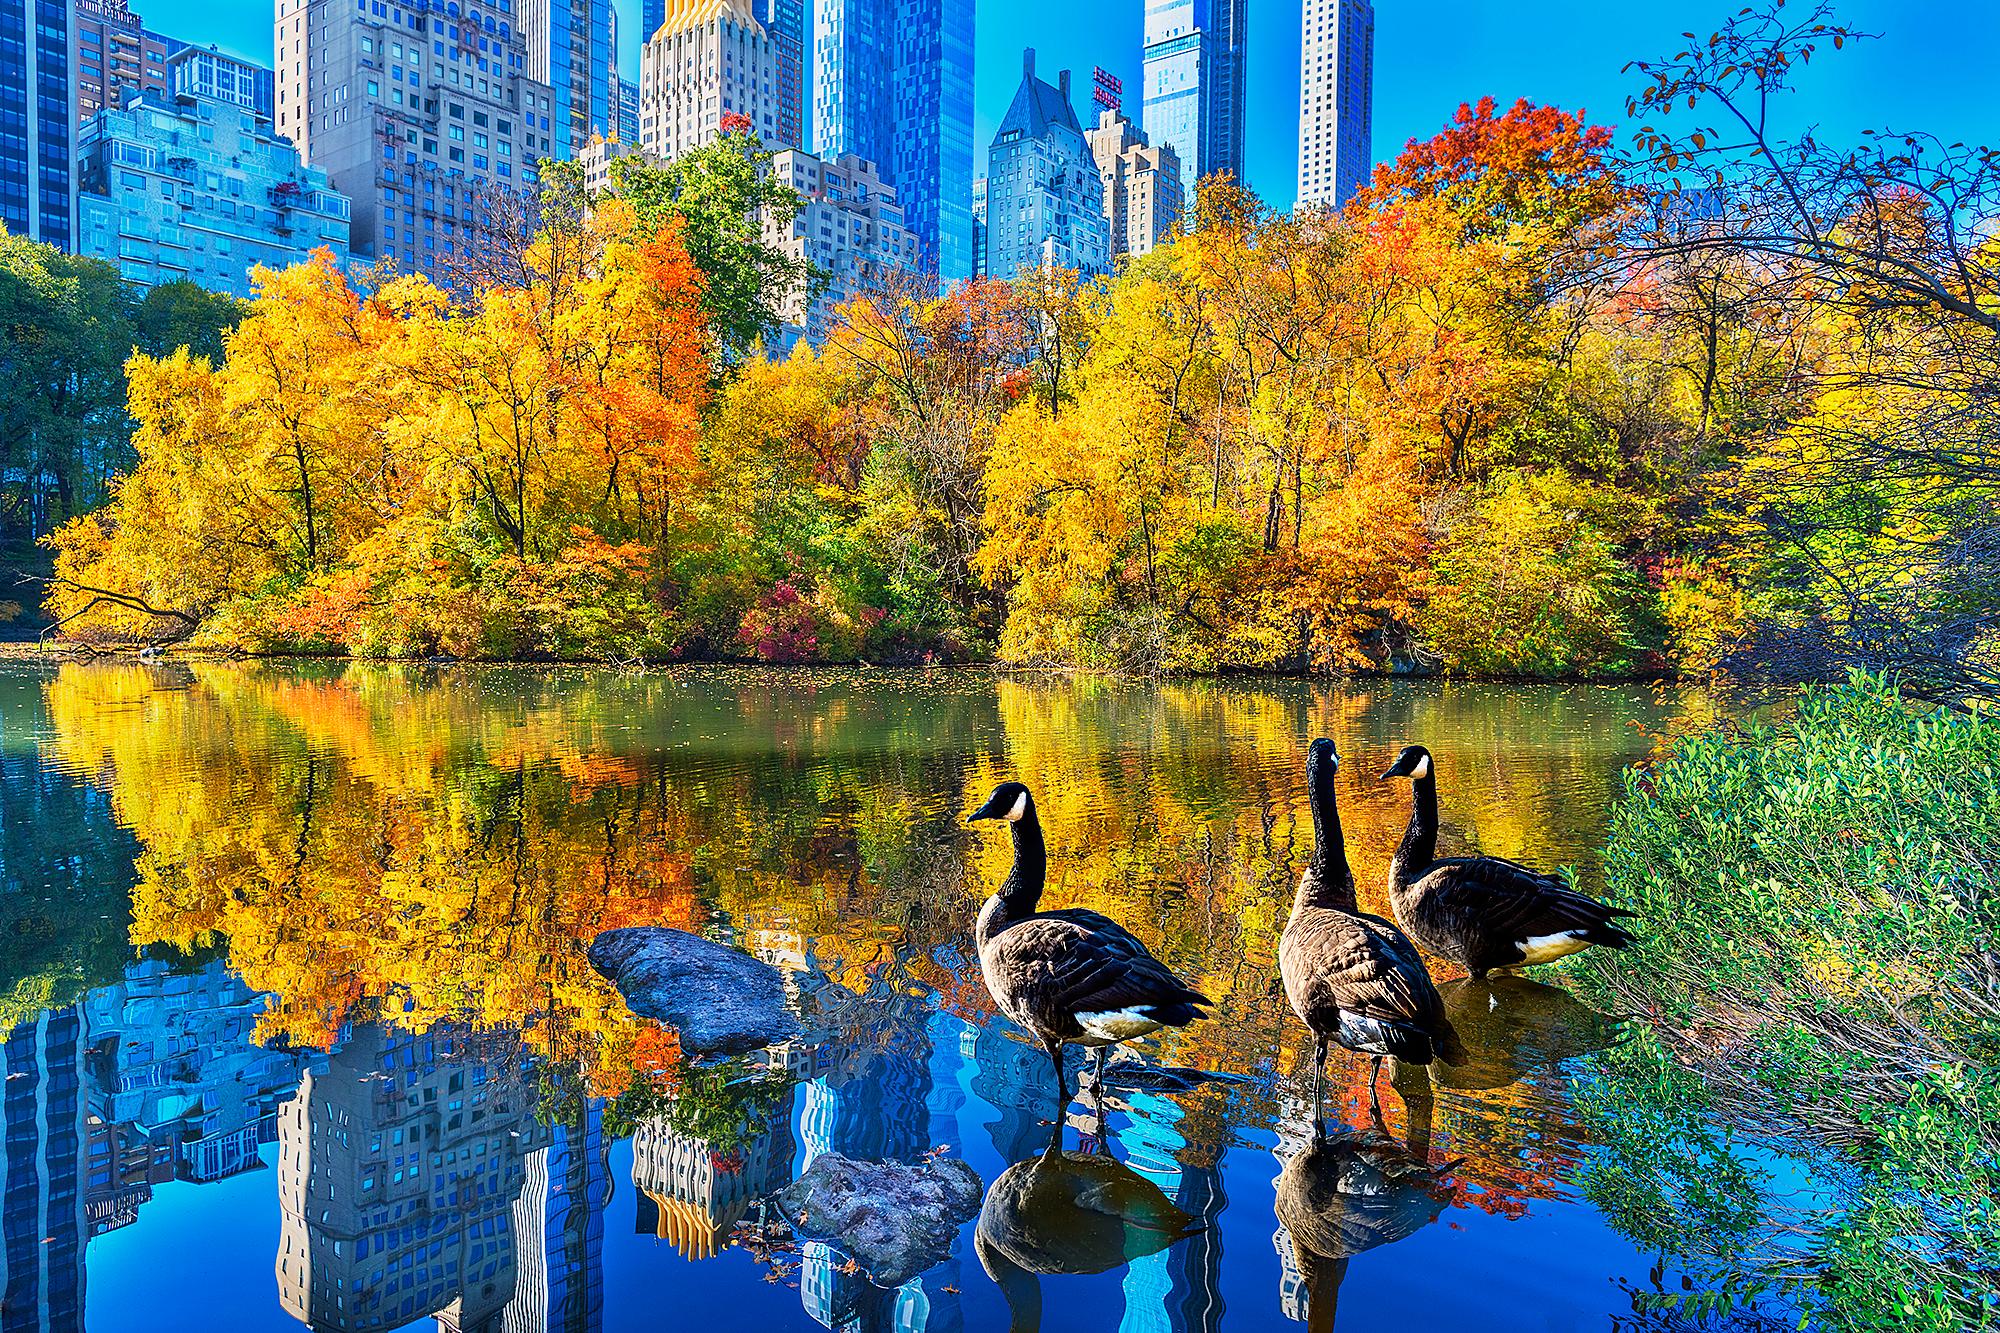 Mitchell Funk Landscape Photograph - Ducks In Central Park Pond In Autumn